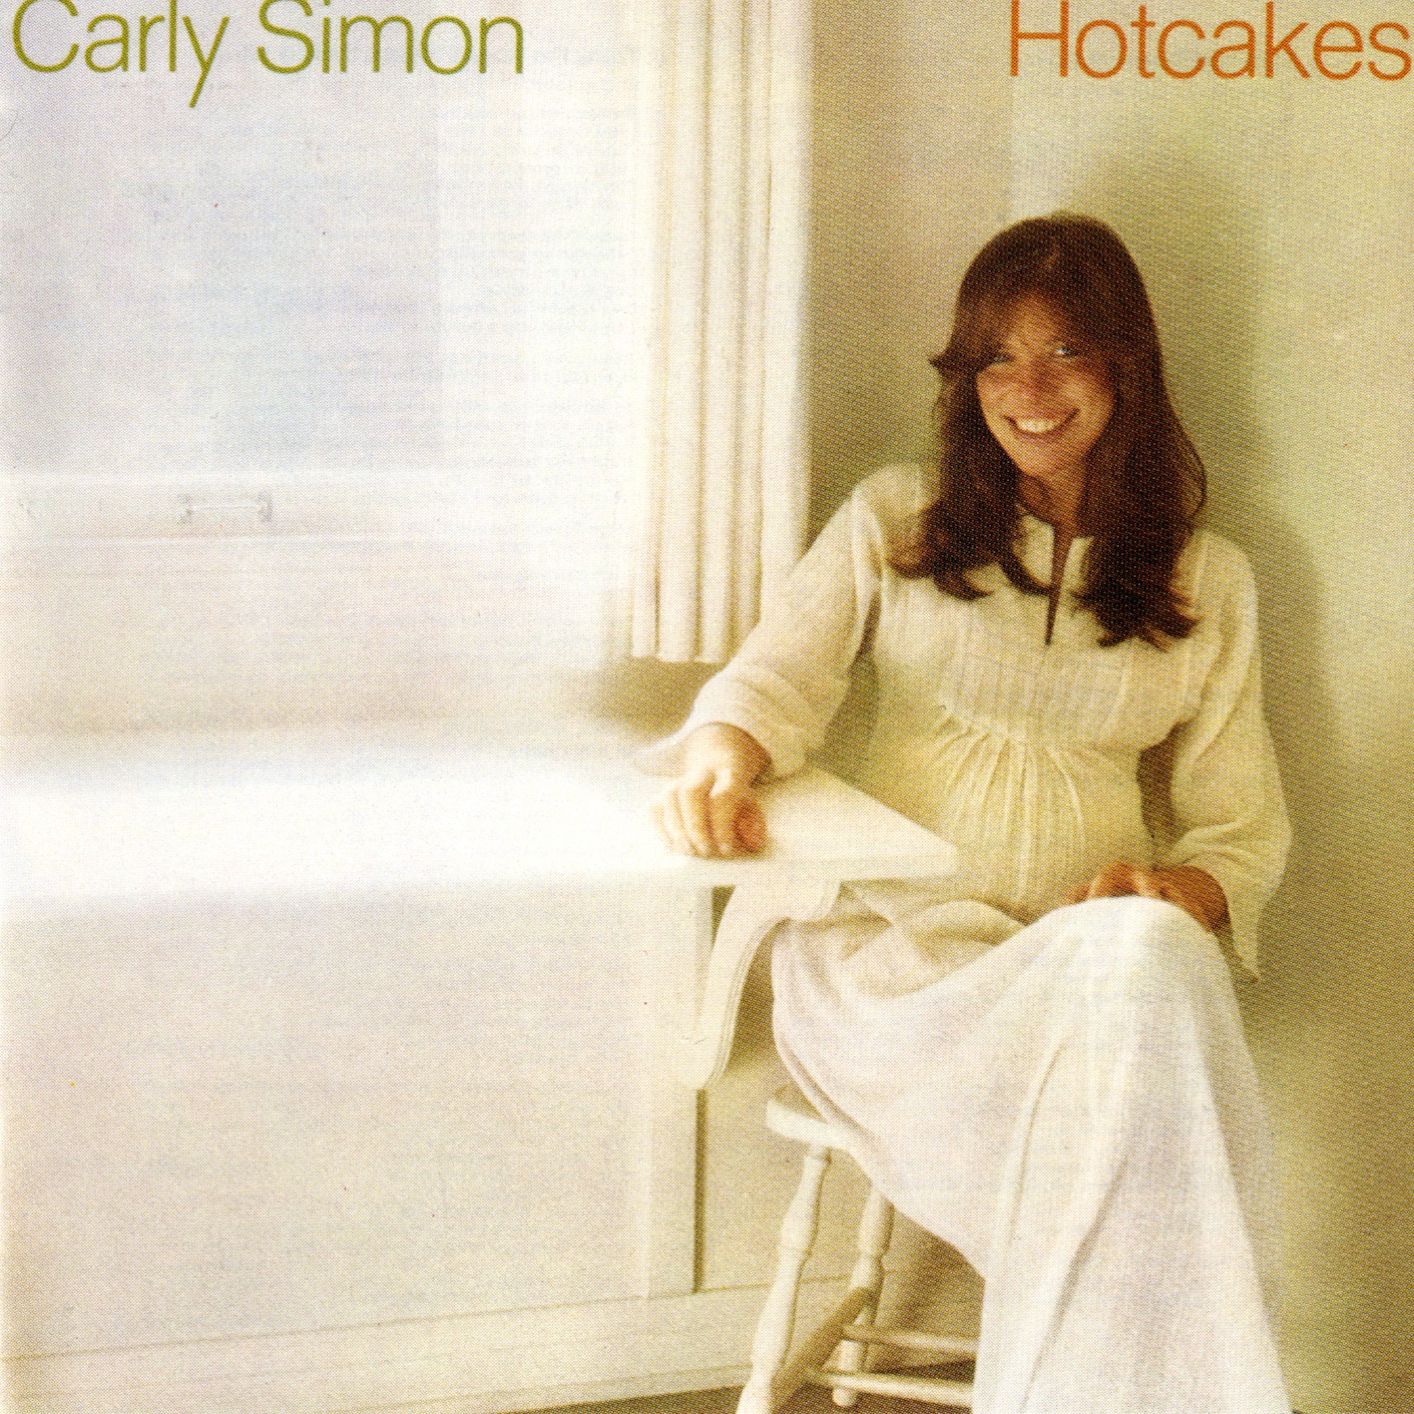 Carly Simon - Hotcakes (1974/2015) [HDTracks FLAC 24bit/96kHz]